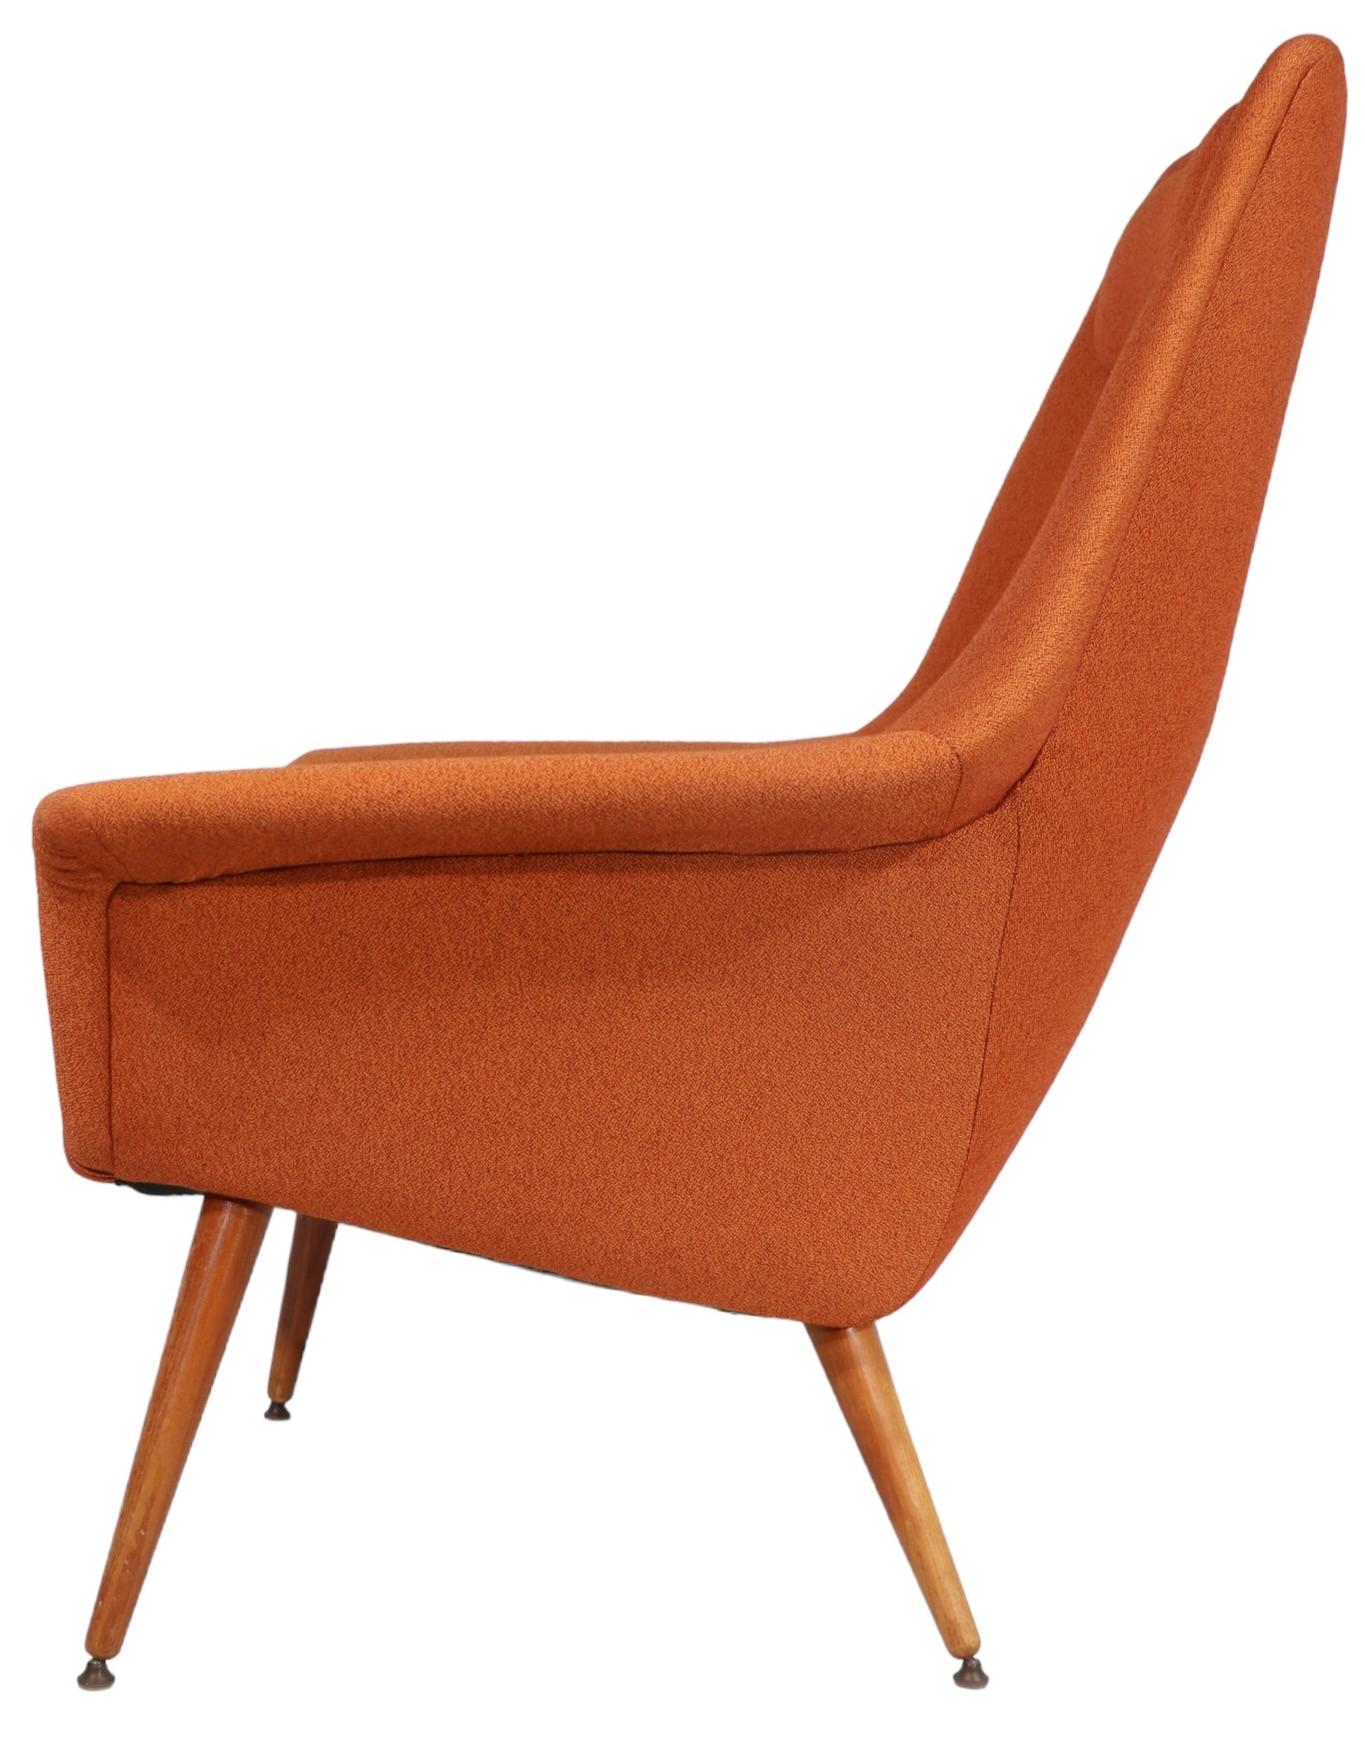  Torbjorn Afdal Bjarne Hansen Butterfly Chair Made in Norway c 1950's For Sale 2